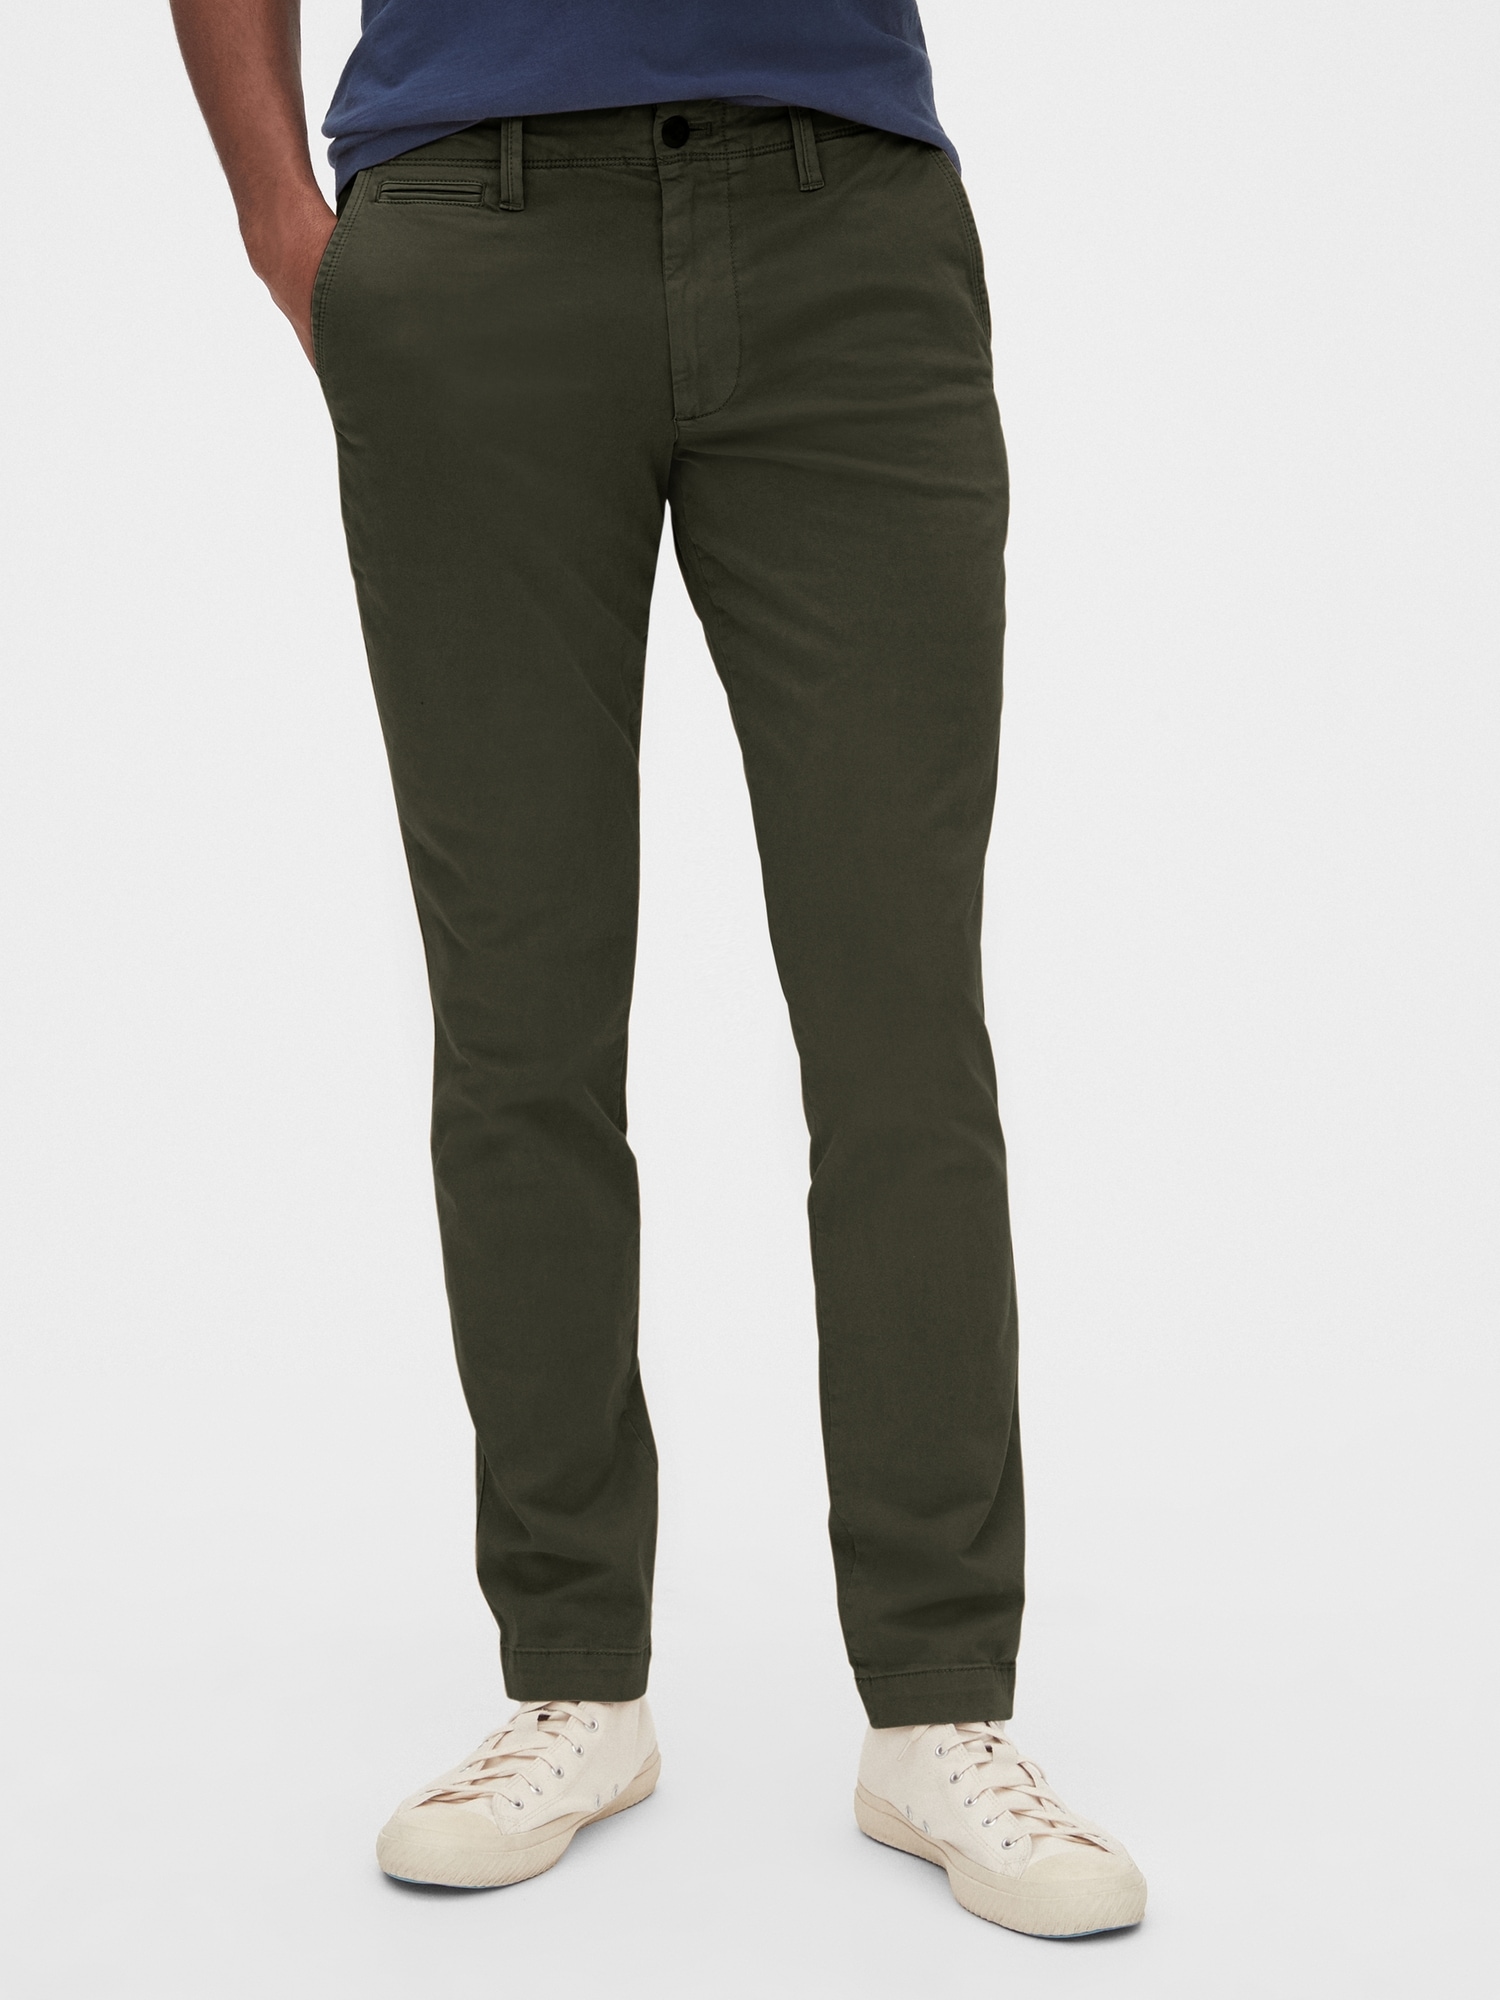 Vintage Khakis in Skinny Fit with GapFlex | Gap